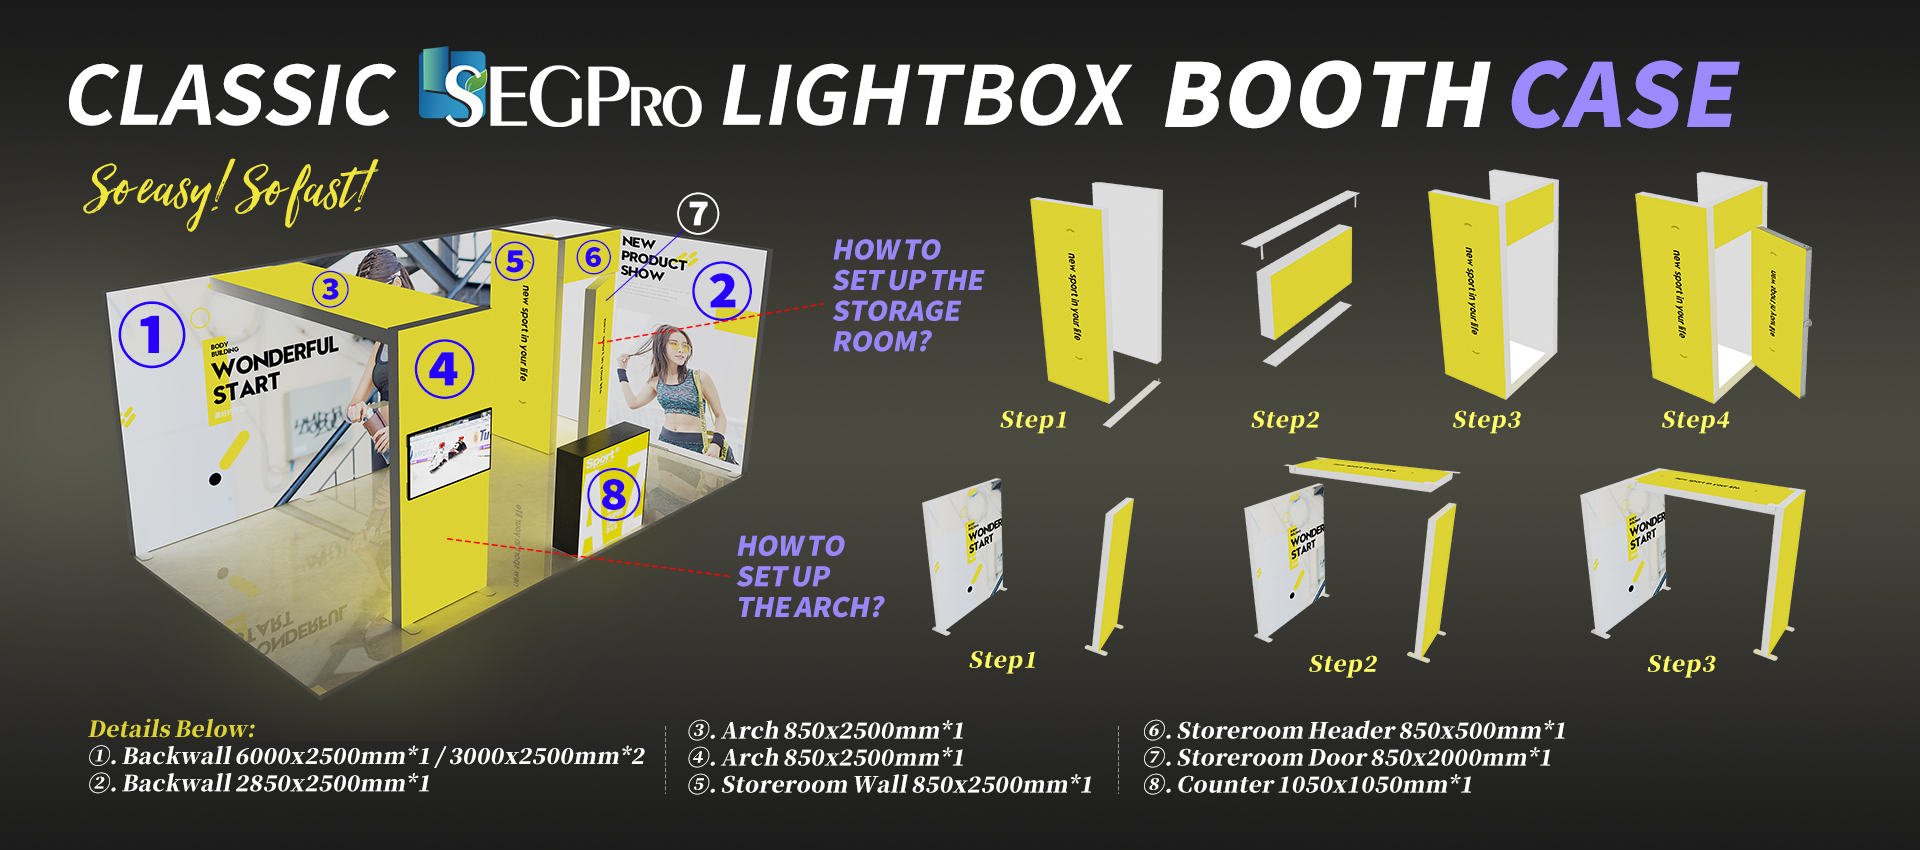 SEGPRO lightbox booth case